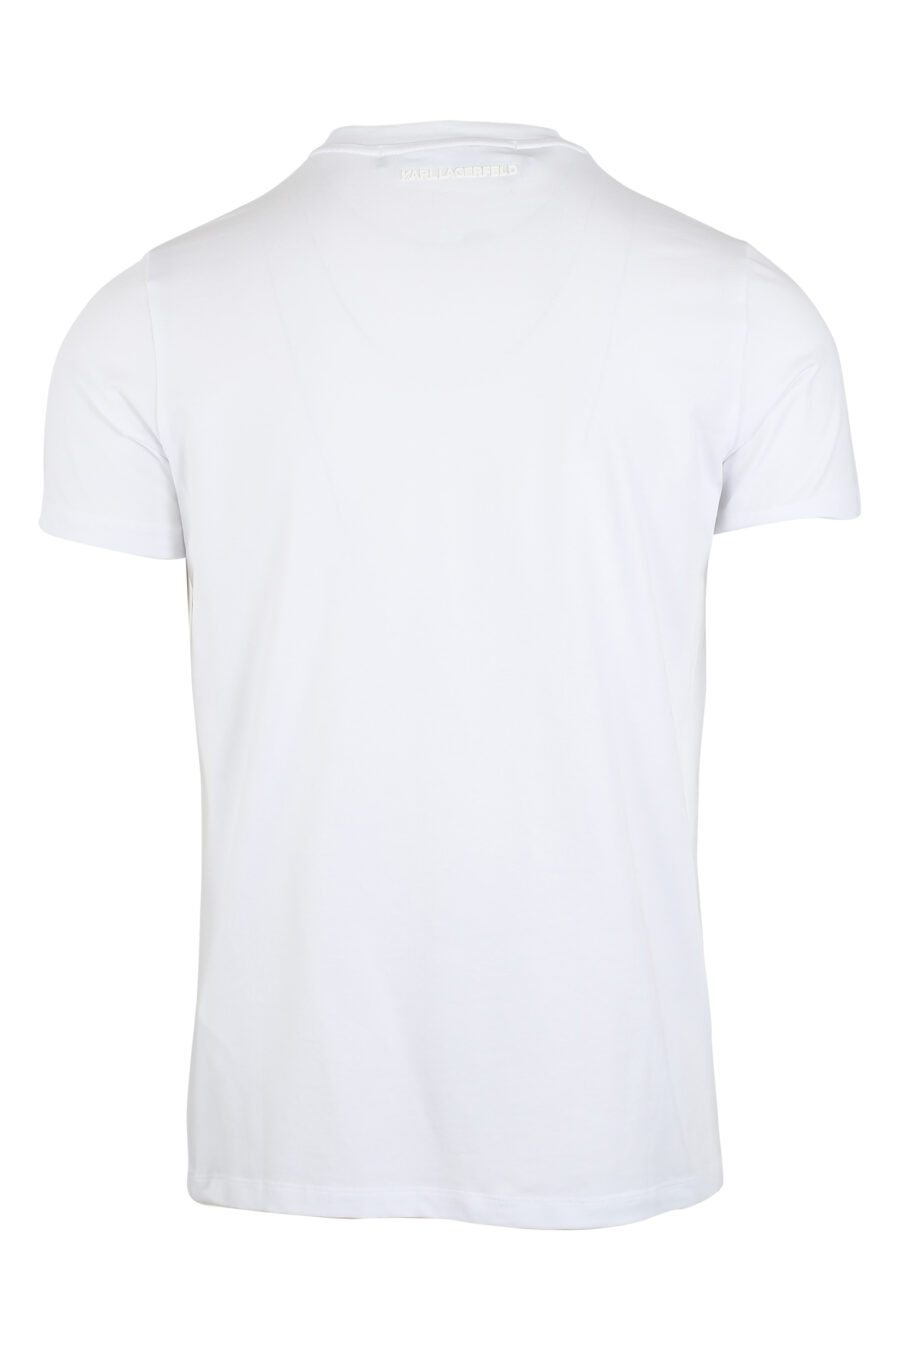 T-shirt blanc avec logo en hologramme - IMG 9487